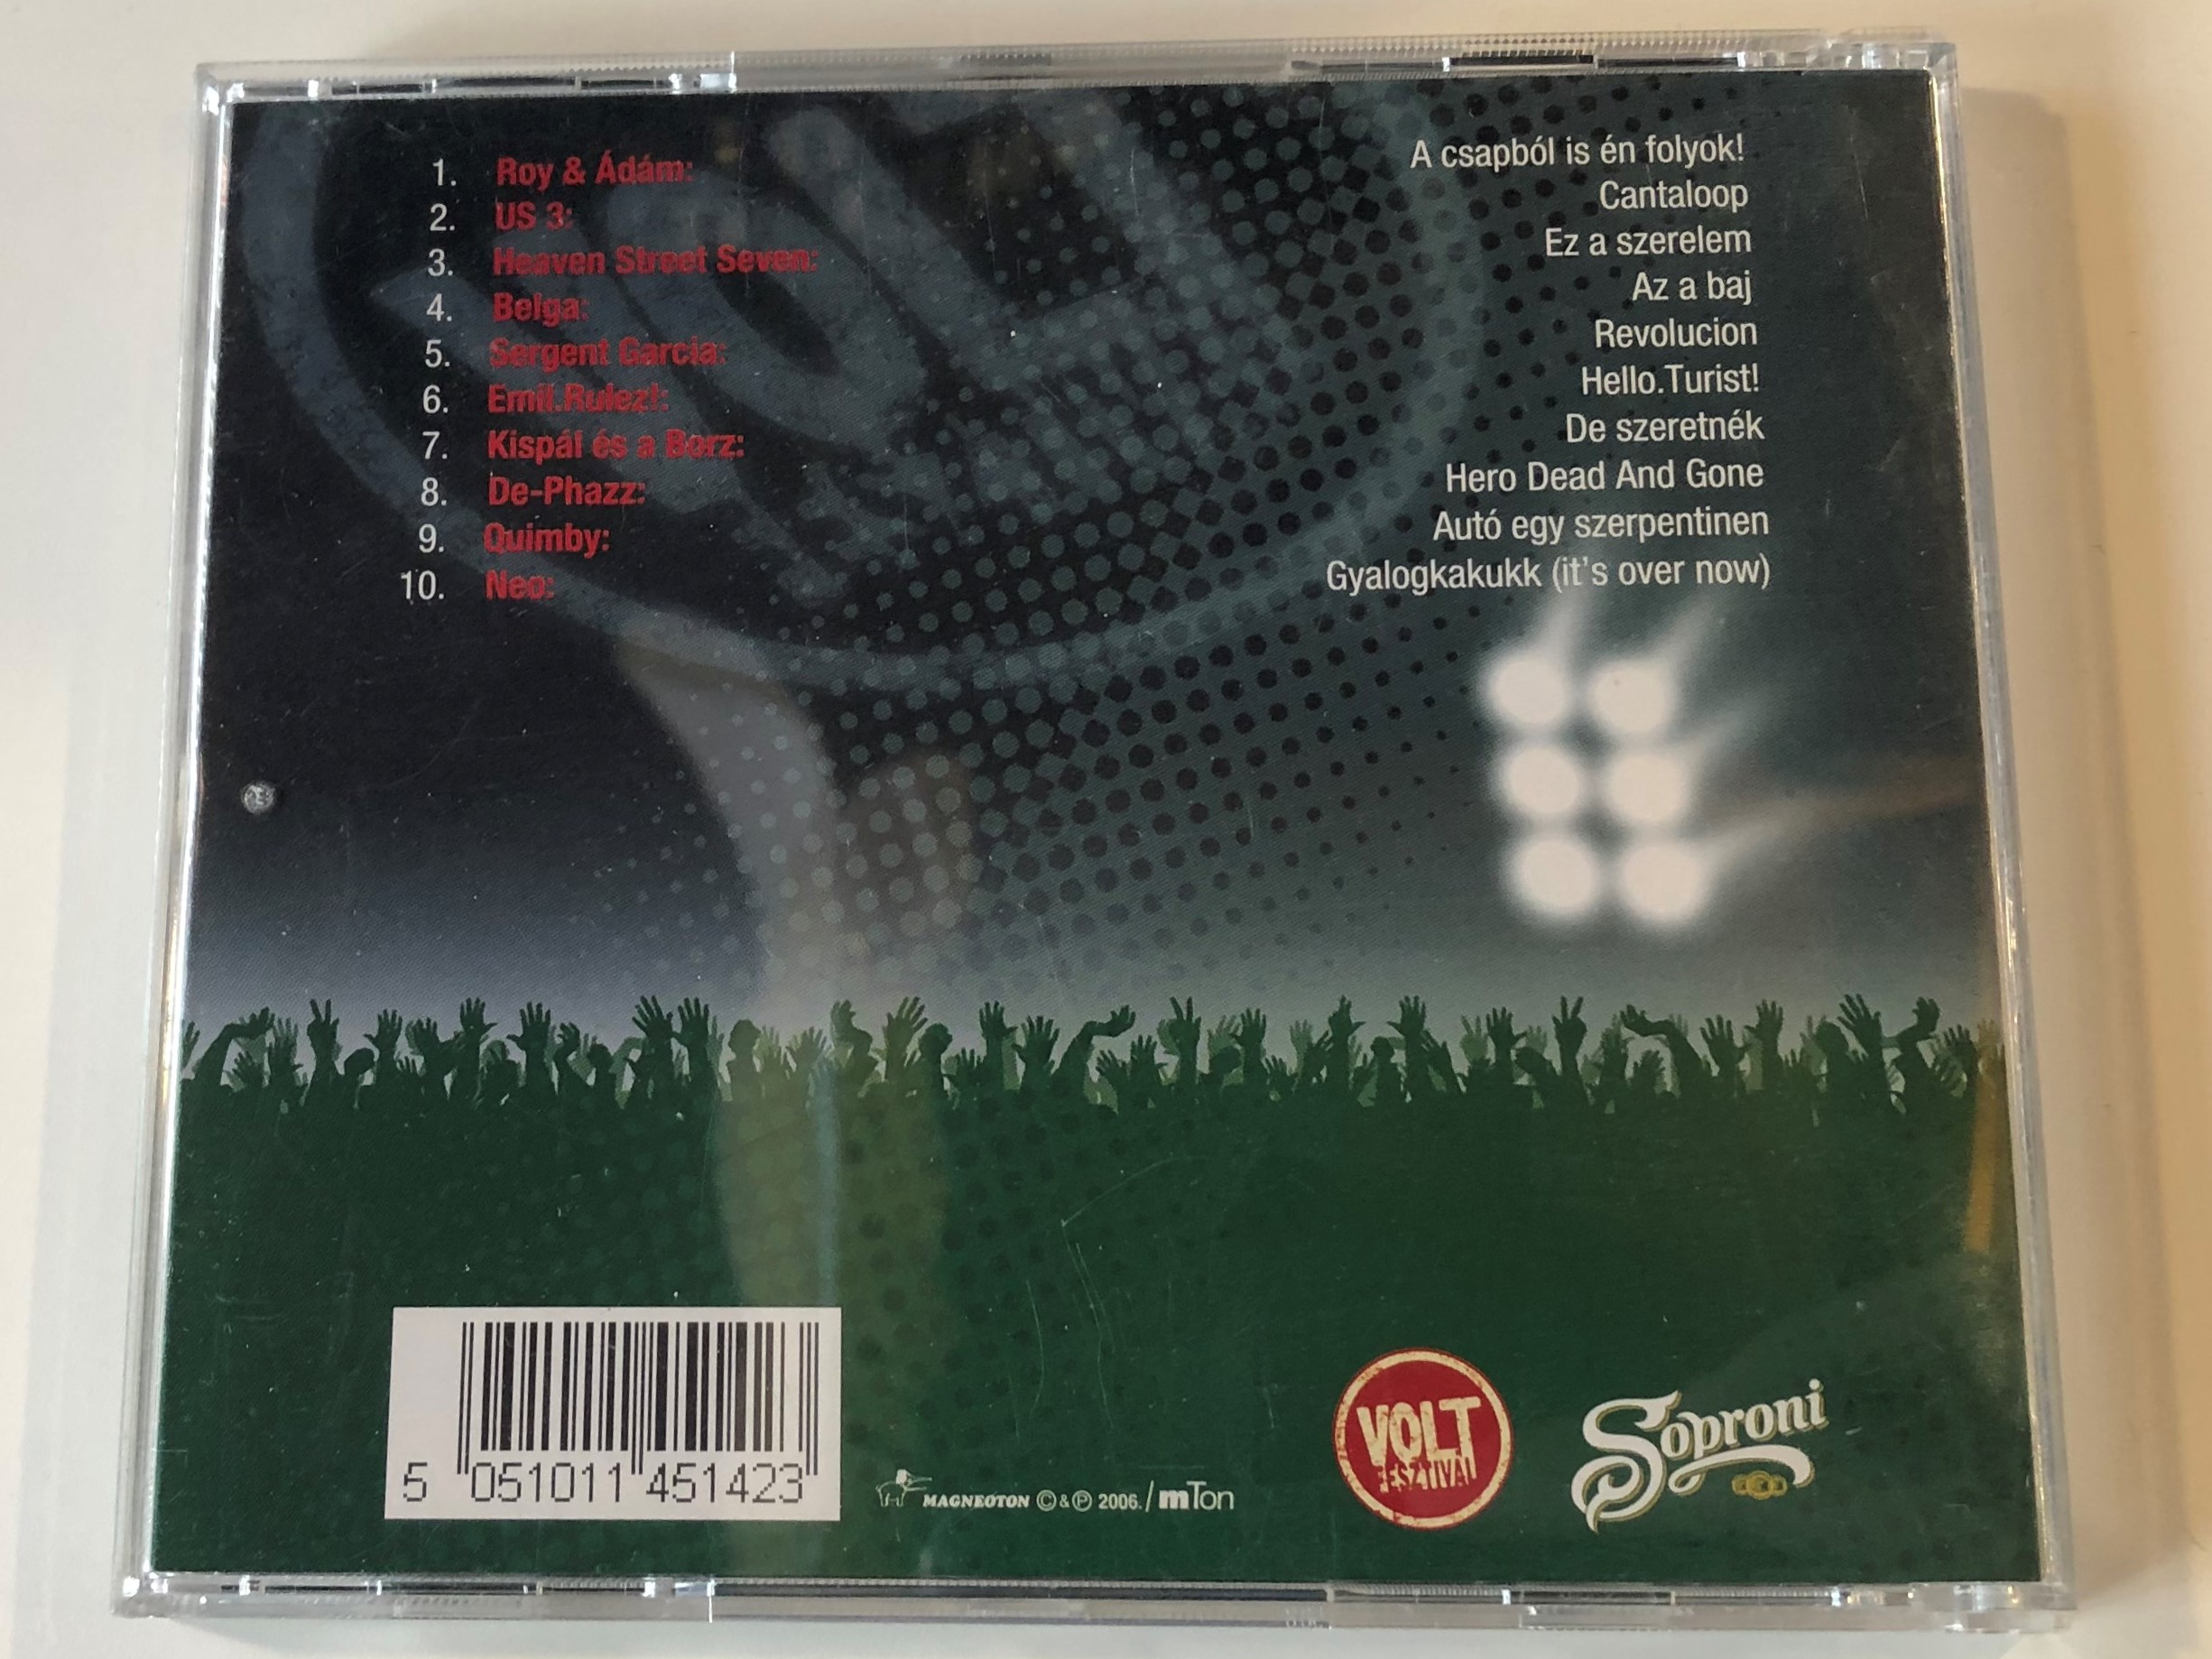 volt-fesztival-soproni-best-of-volt-fesztival-magneoton-audio-cd-2006-5051011451423-2-.jpg